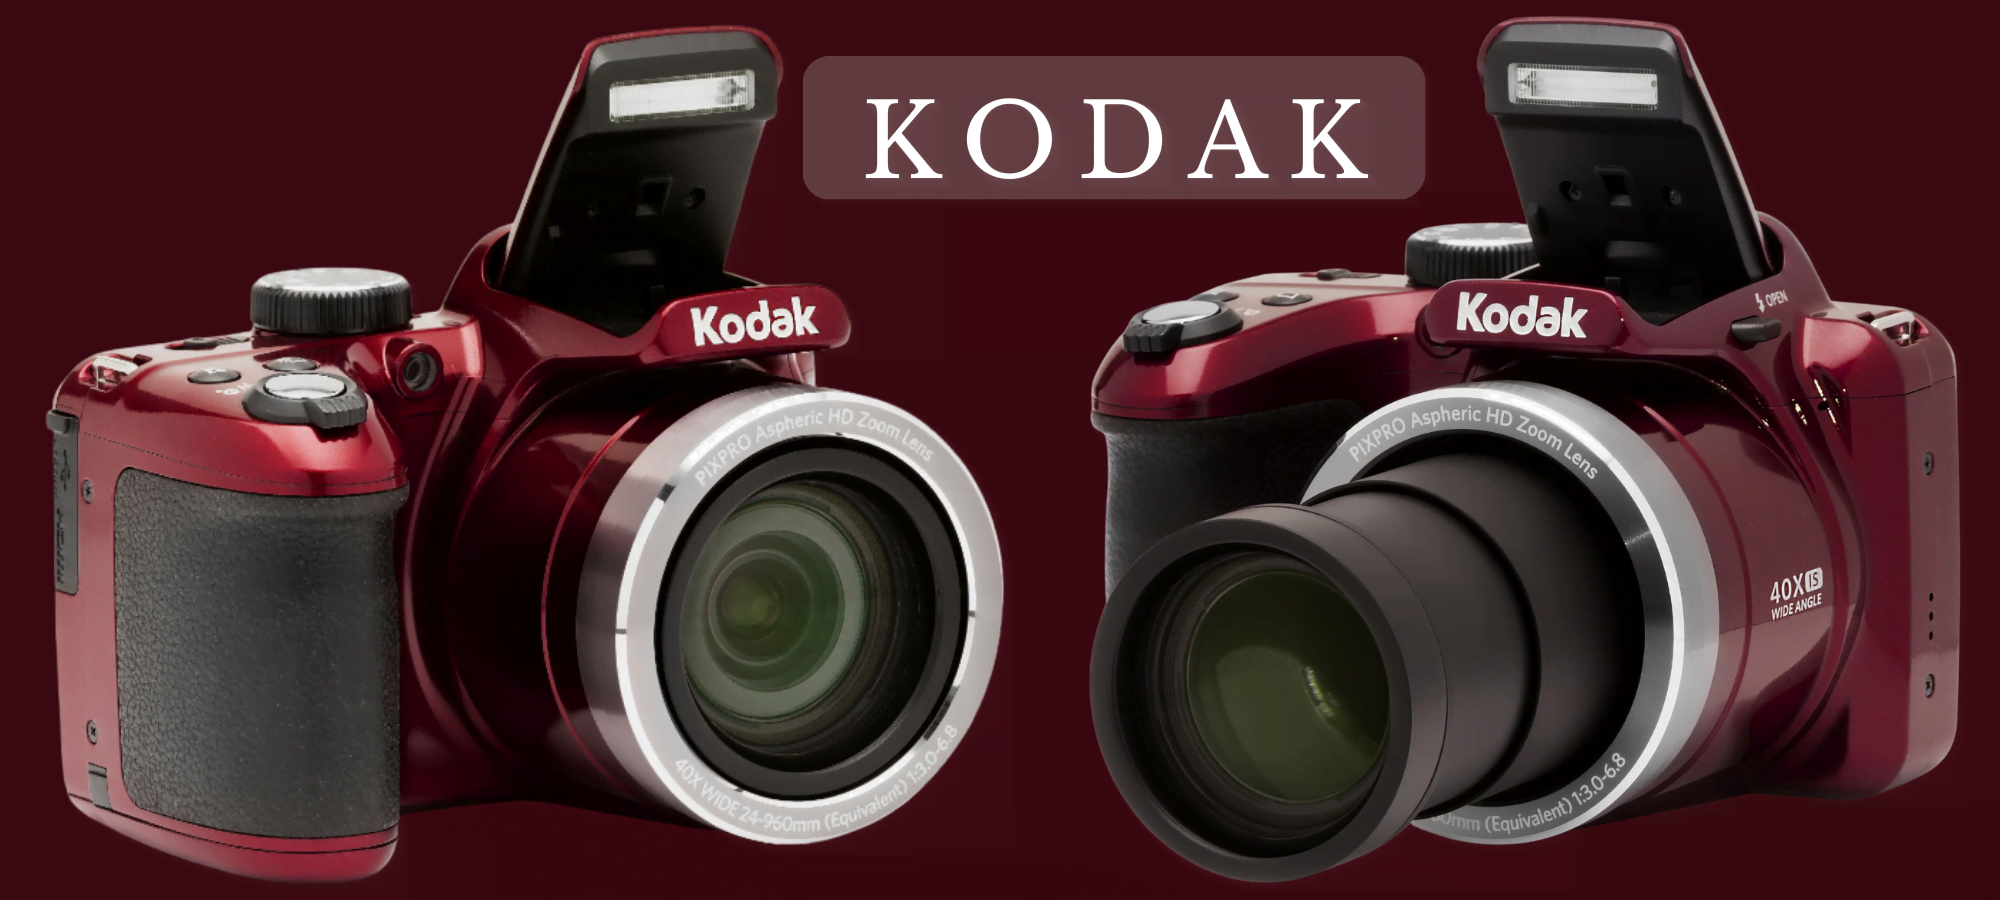 Kodak AZ401RD Point & Shoot Digital Camera with 3 LCD, Red